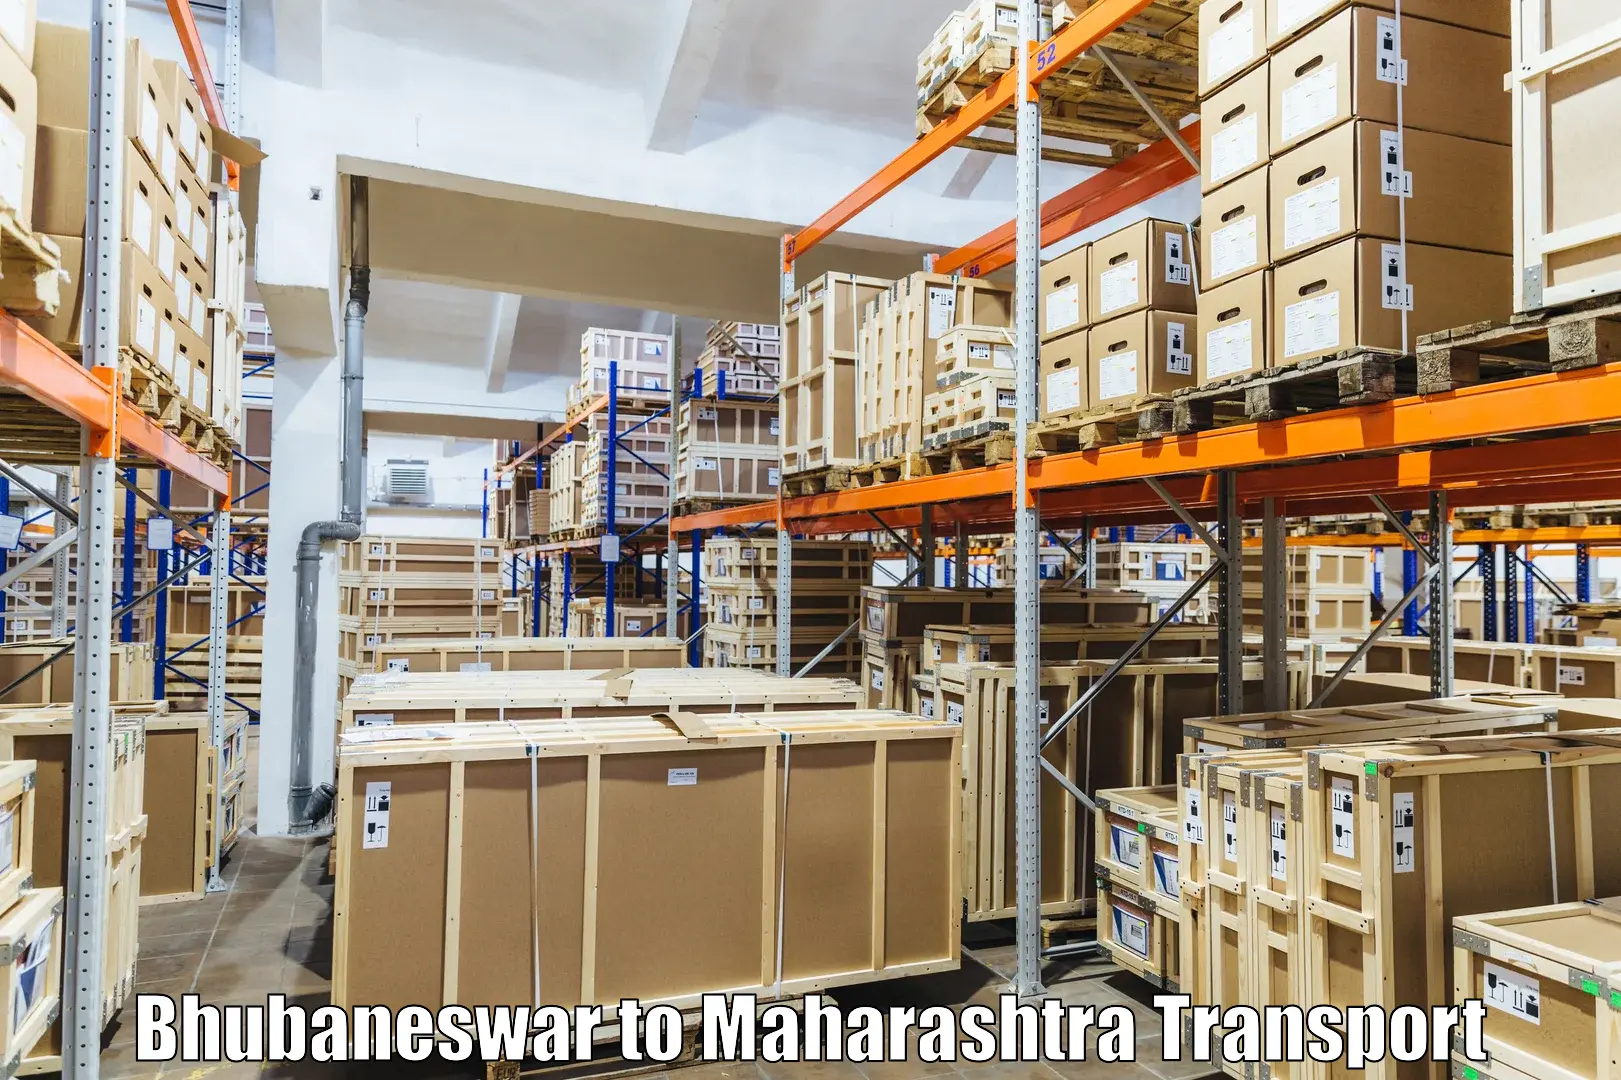 Truck transport companies in India Bhubaneswar to Maharashtra